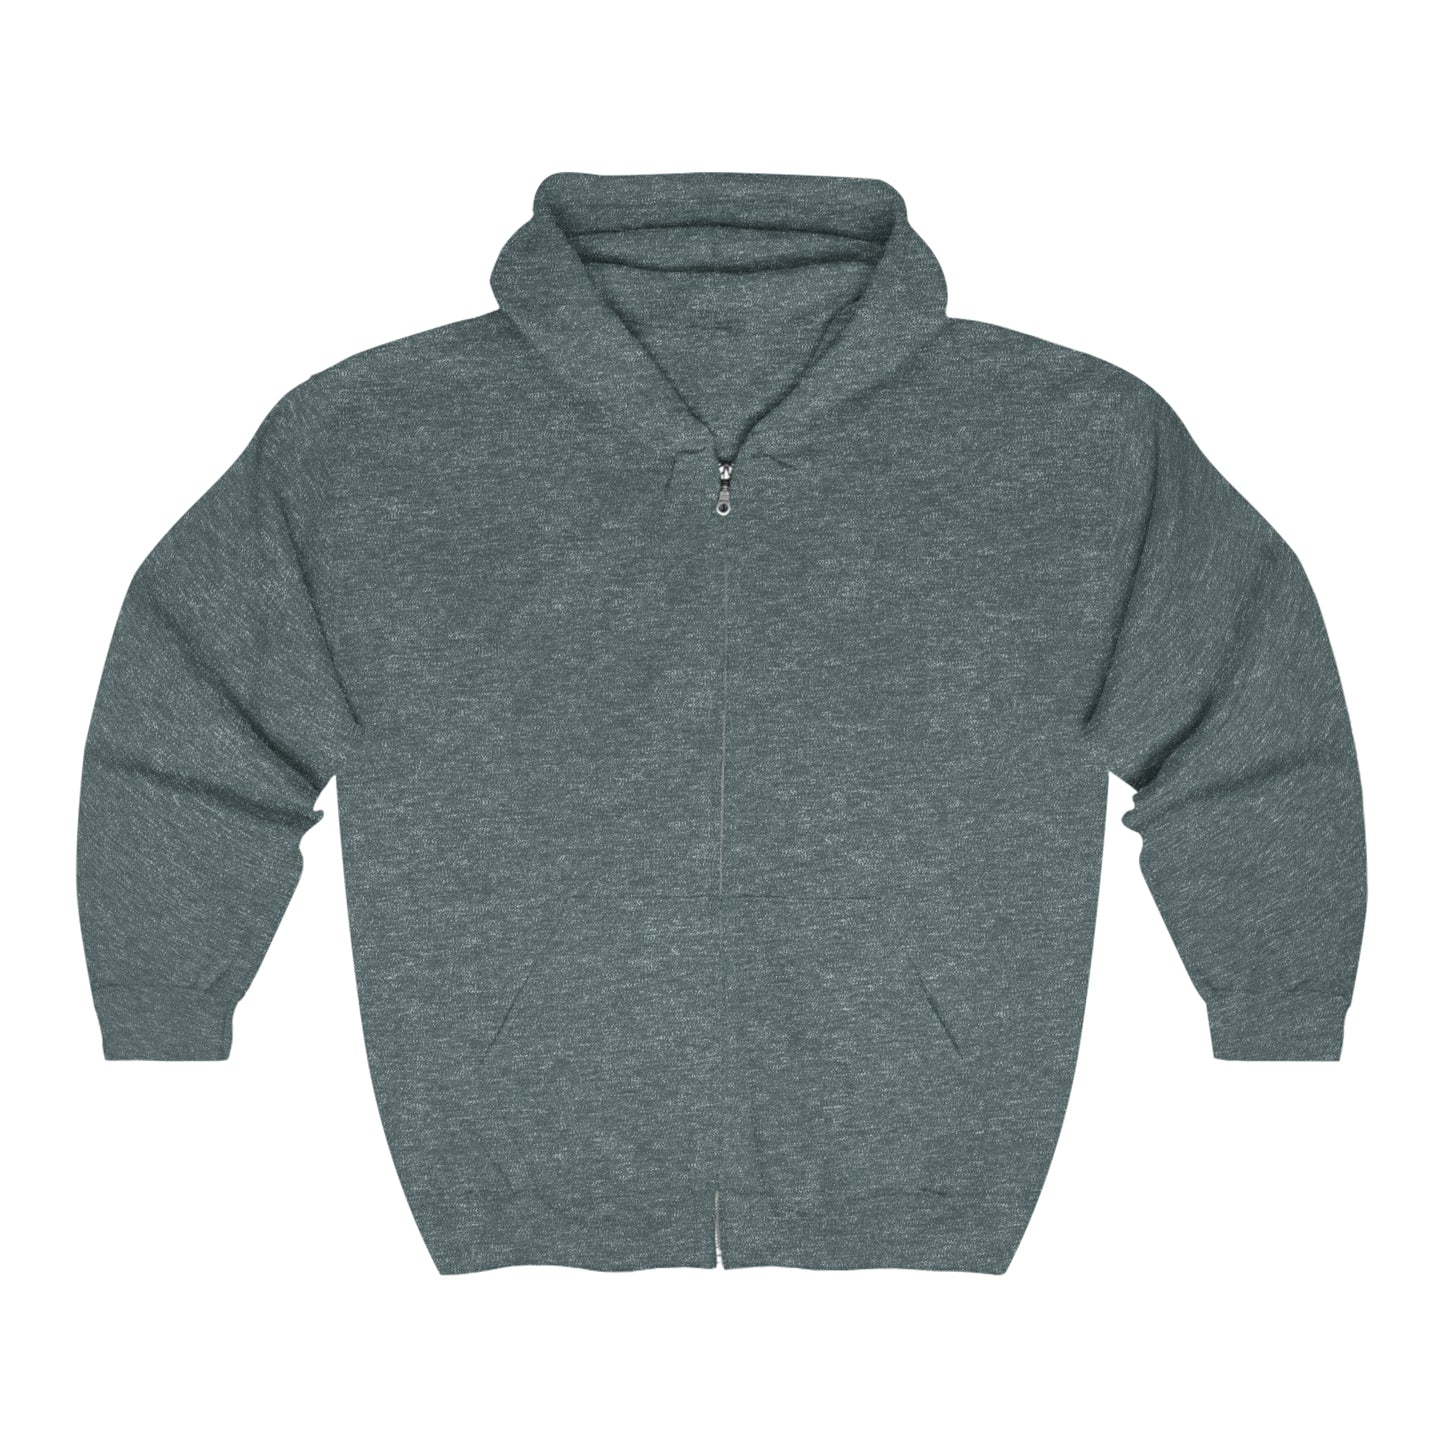 Adopt The Cropped | Zip-up Sweatshirt